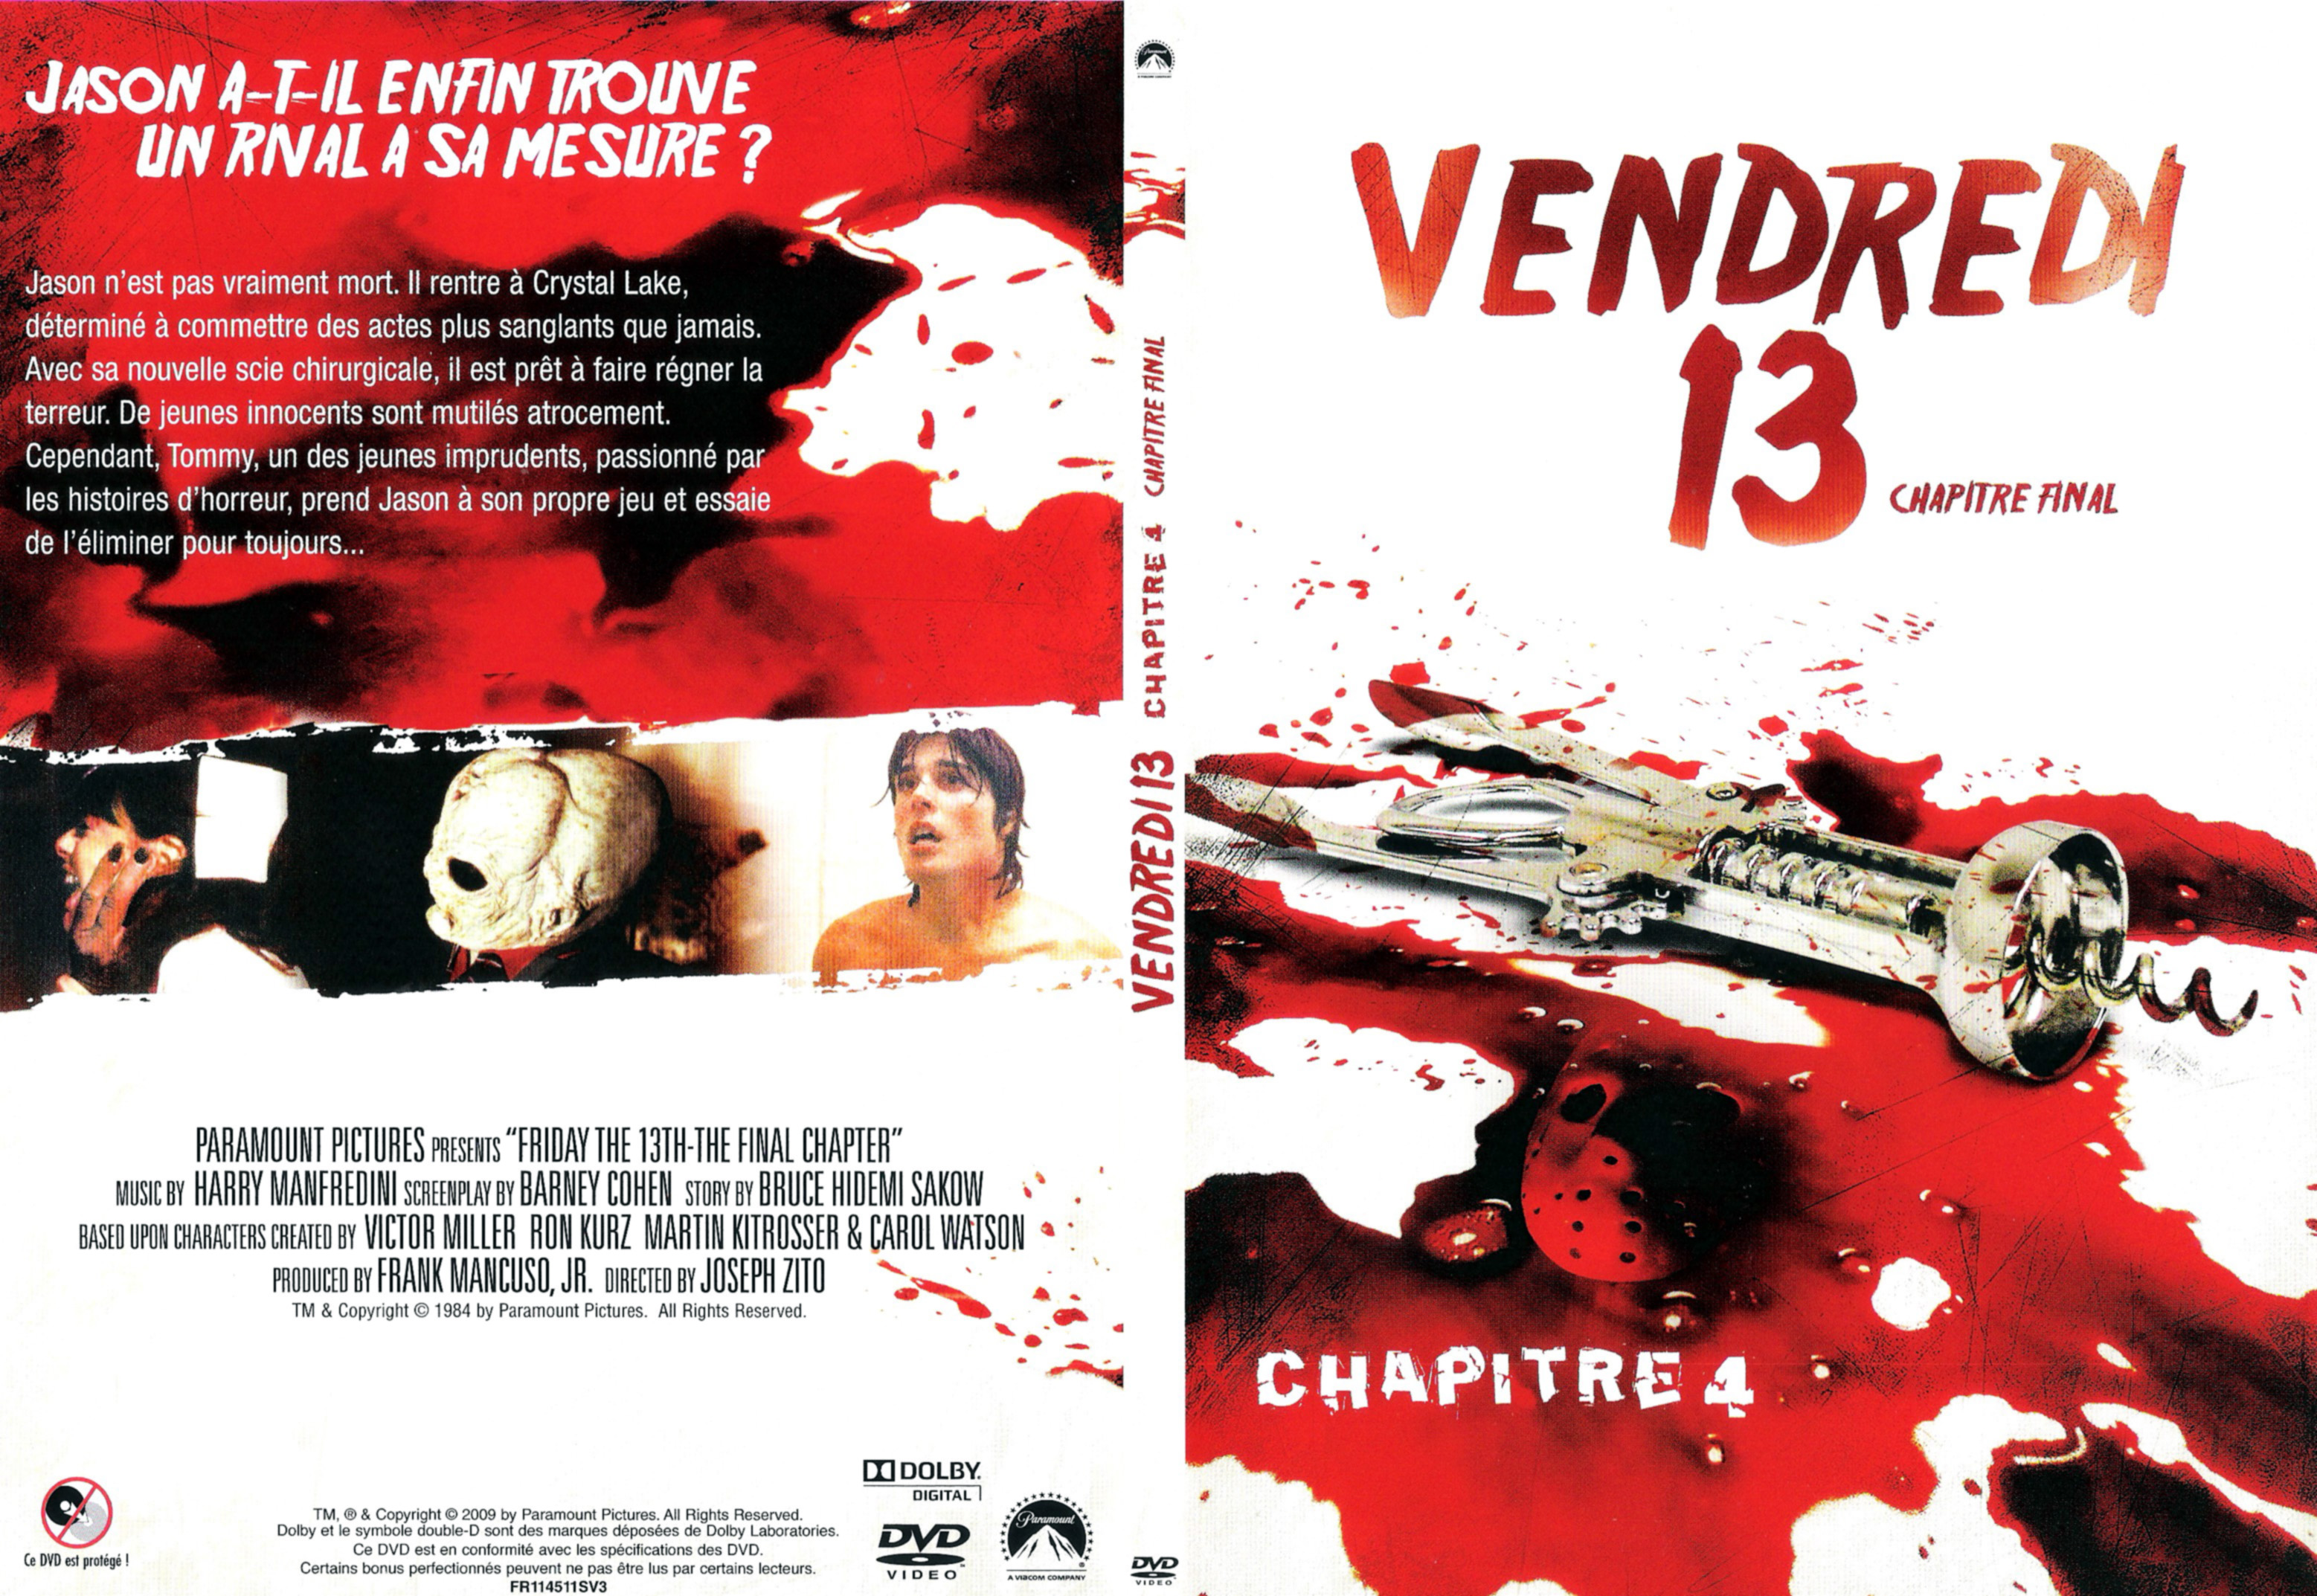 Jaquette DVD Vendredi 13 Chapitre final v2